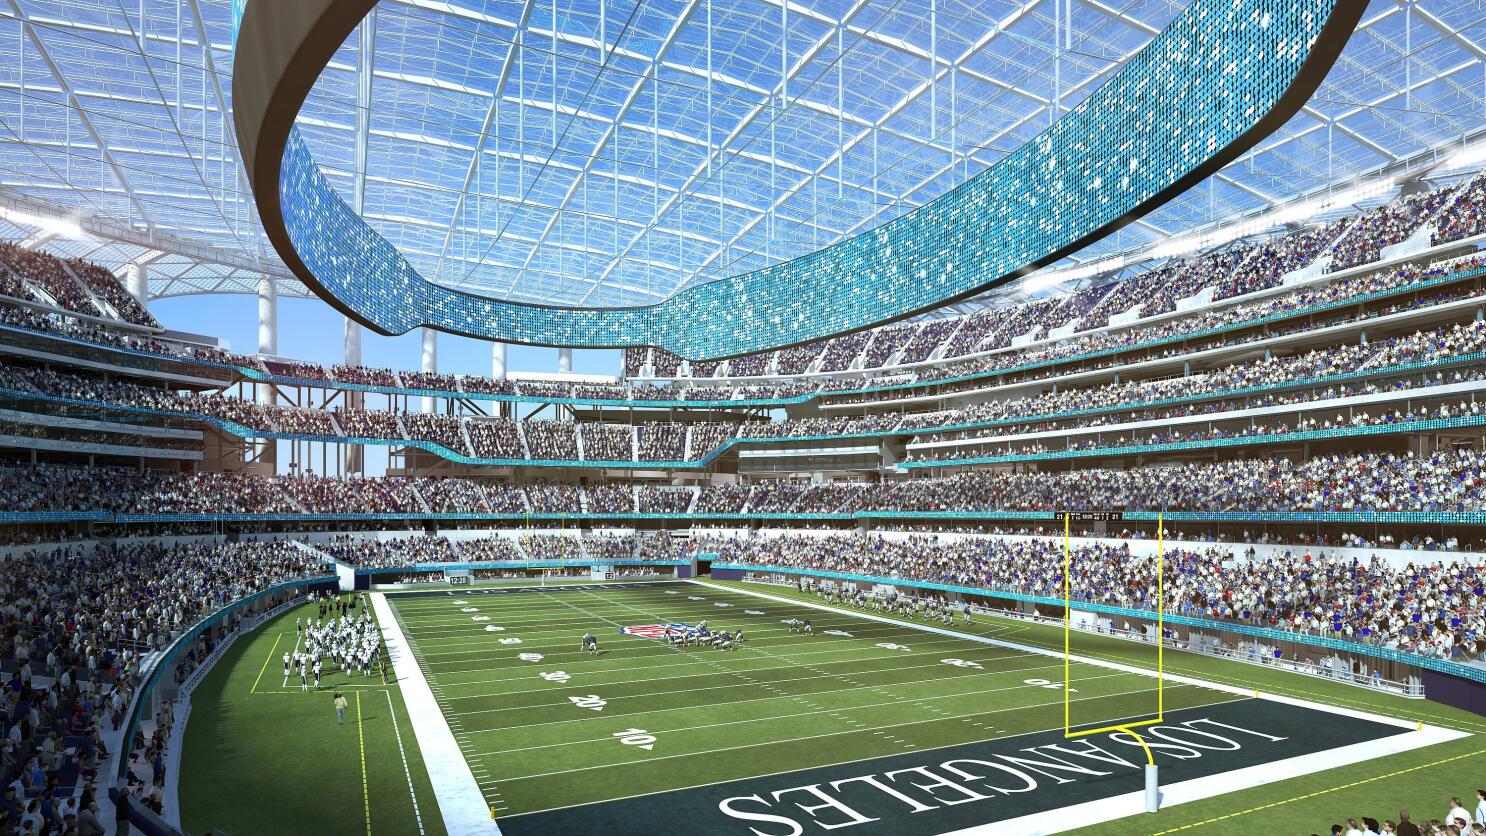 NFL Owner Stan Kroenke Wants to Take Over L.A. - Bloomberg